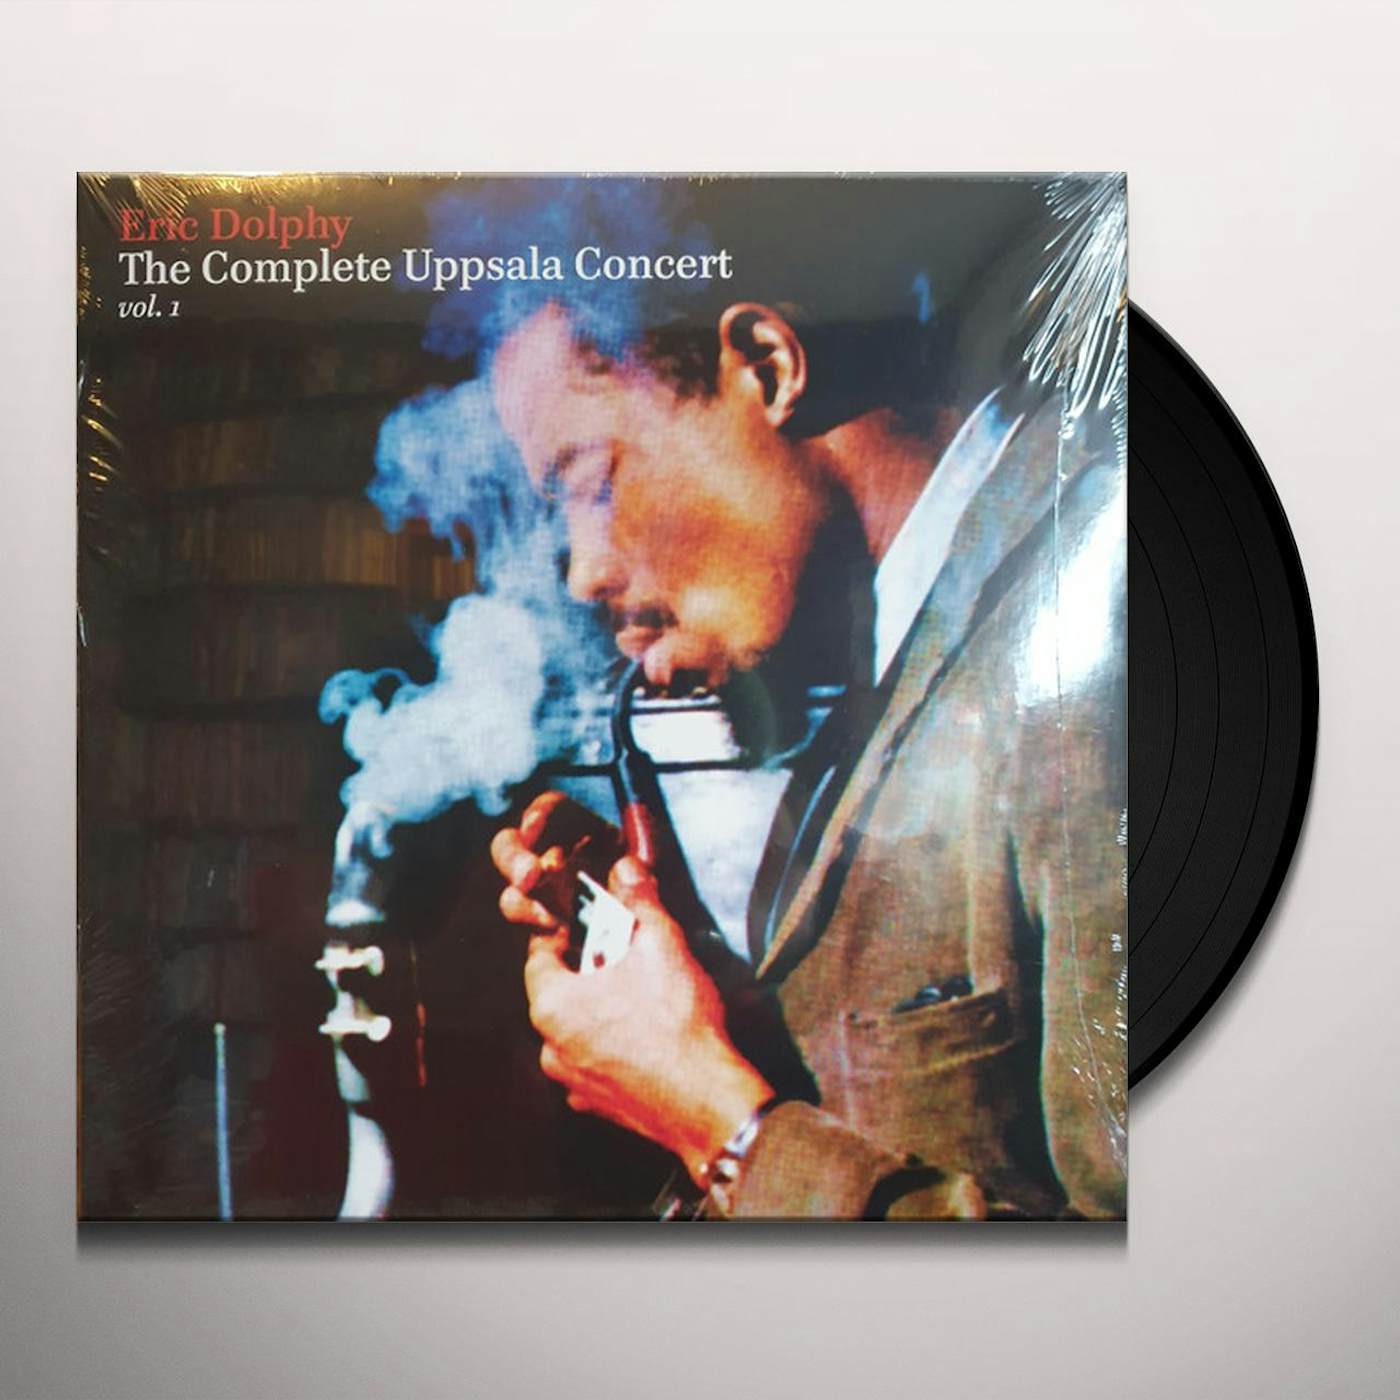 Eric Dolphy COMPLETE UPPSALA CONCERT 1 Vinyl Record